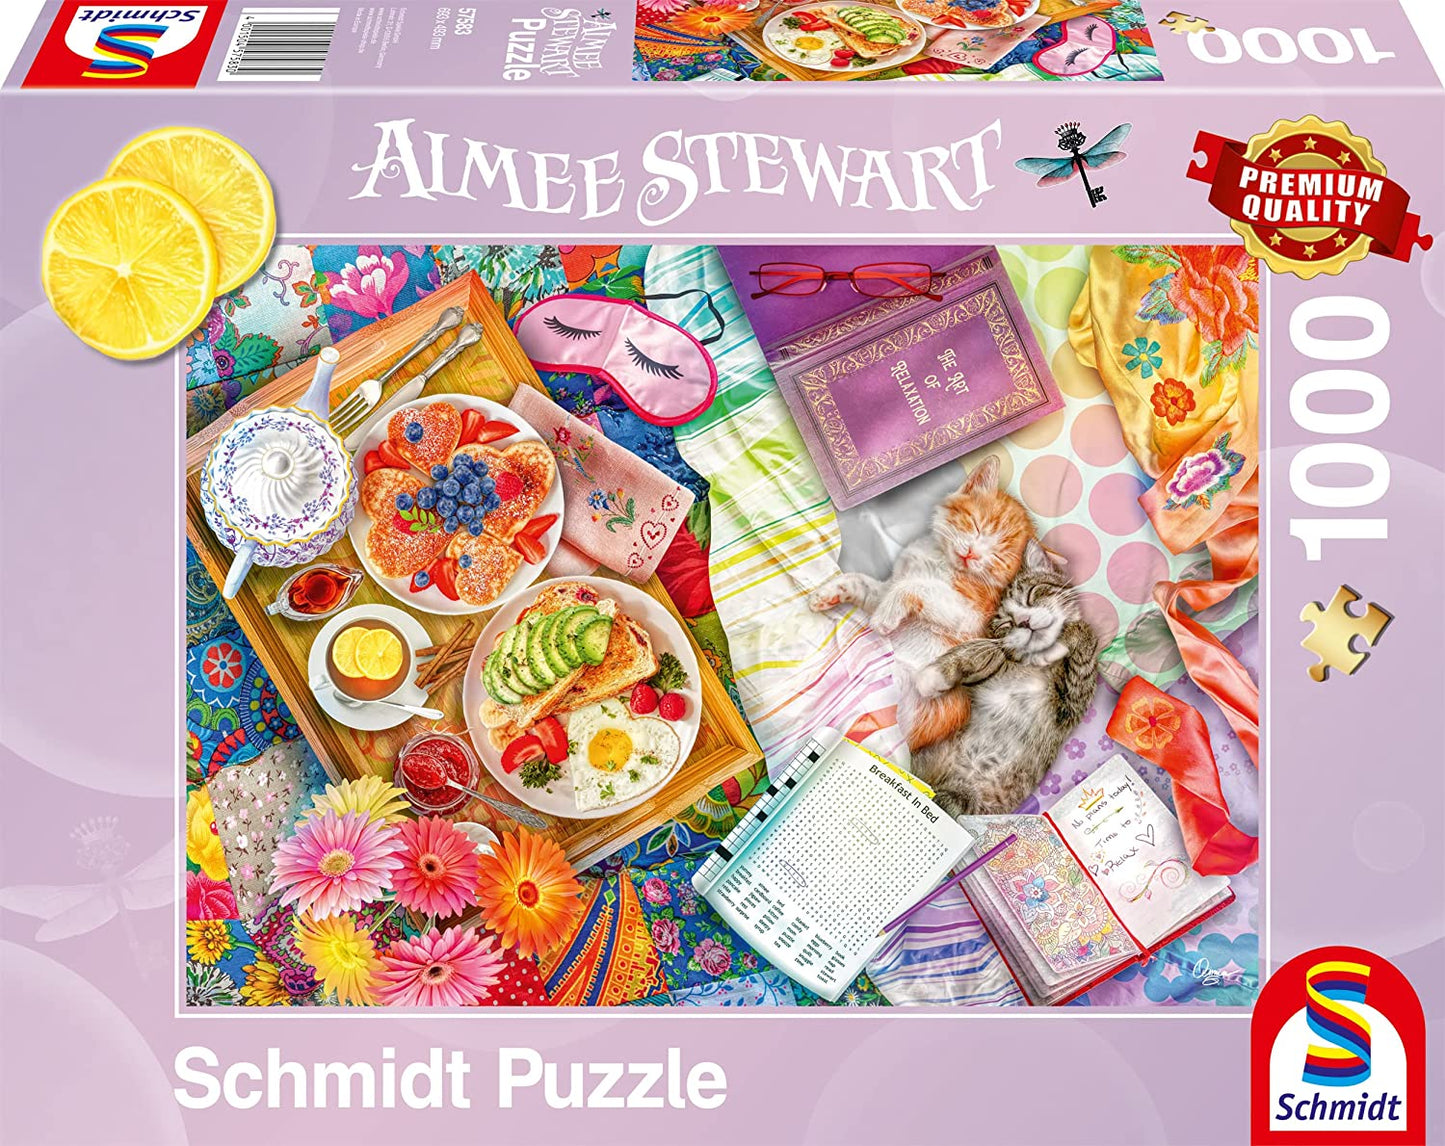 Schmidt - Aimee Stewart: Sunday Breakfast - 1000 Piece Jigsaw Puzzle